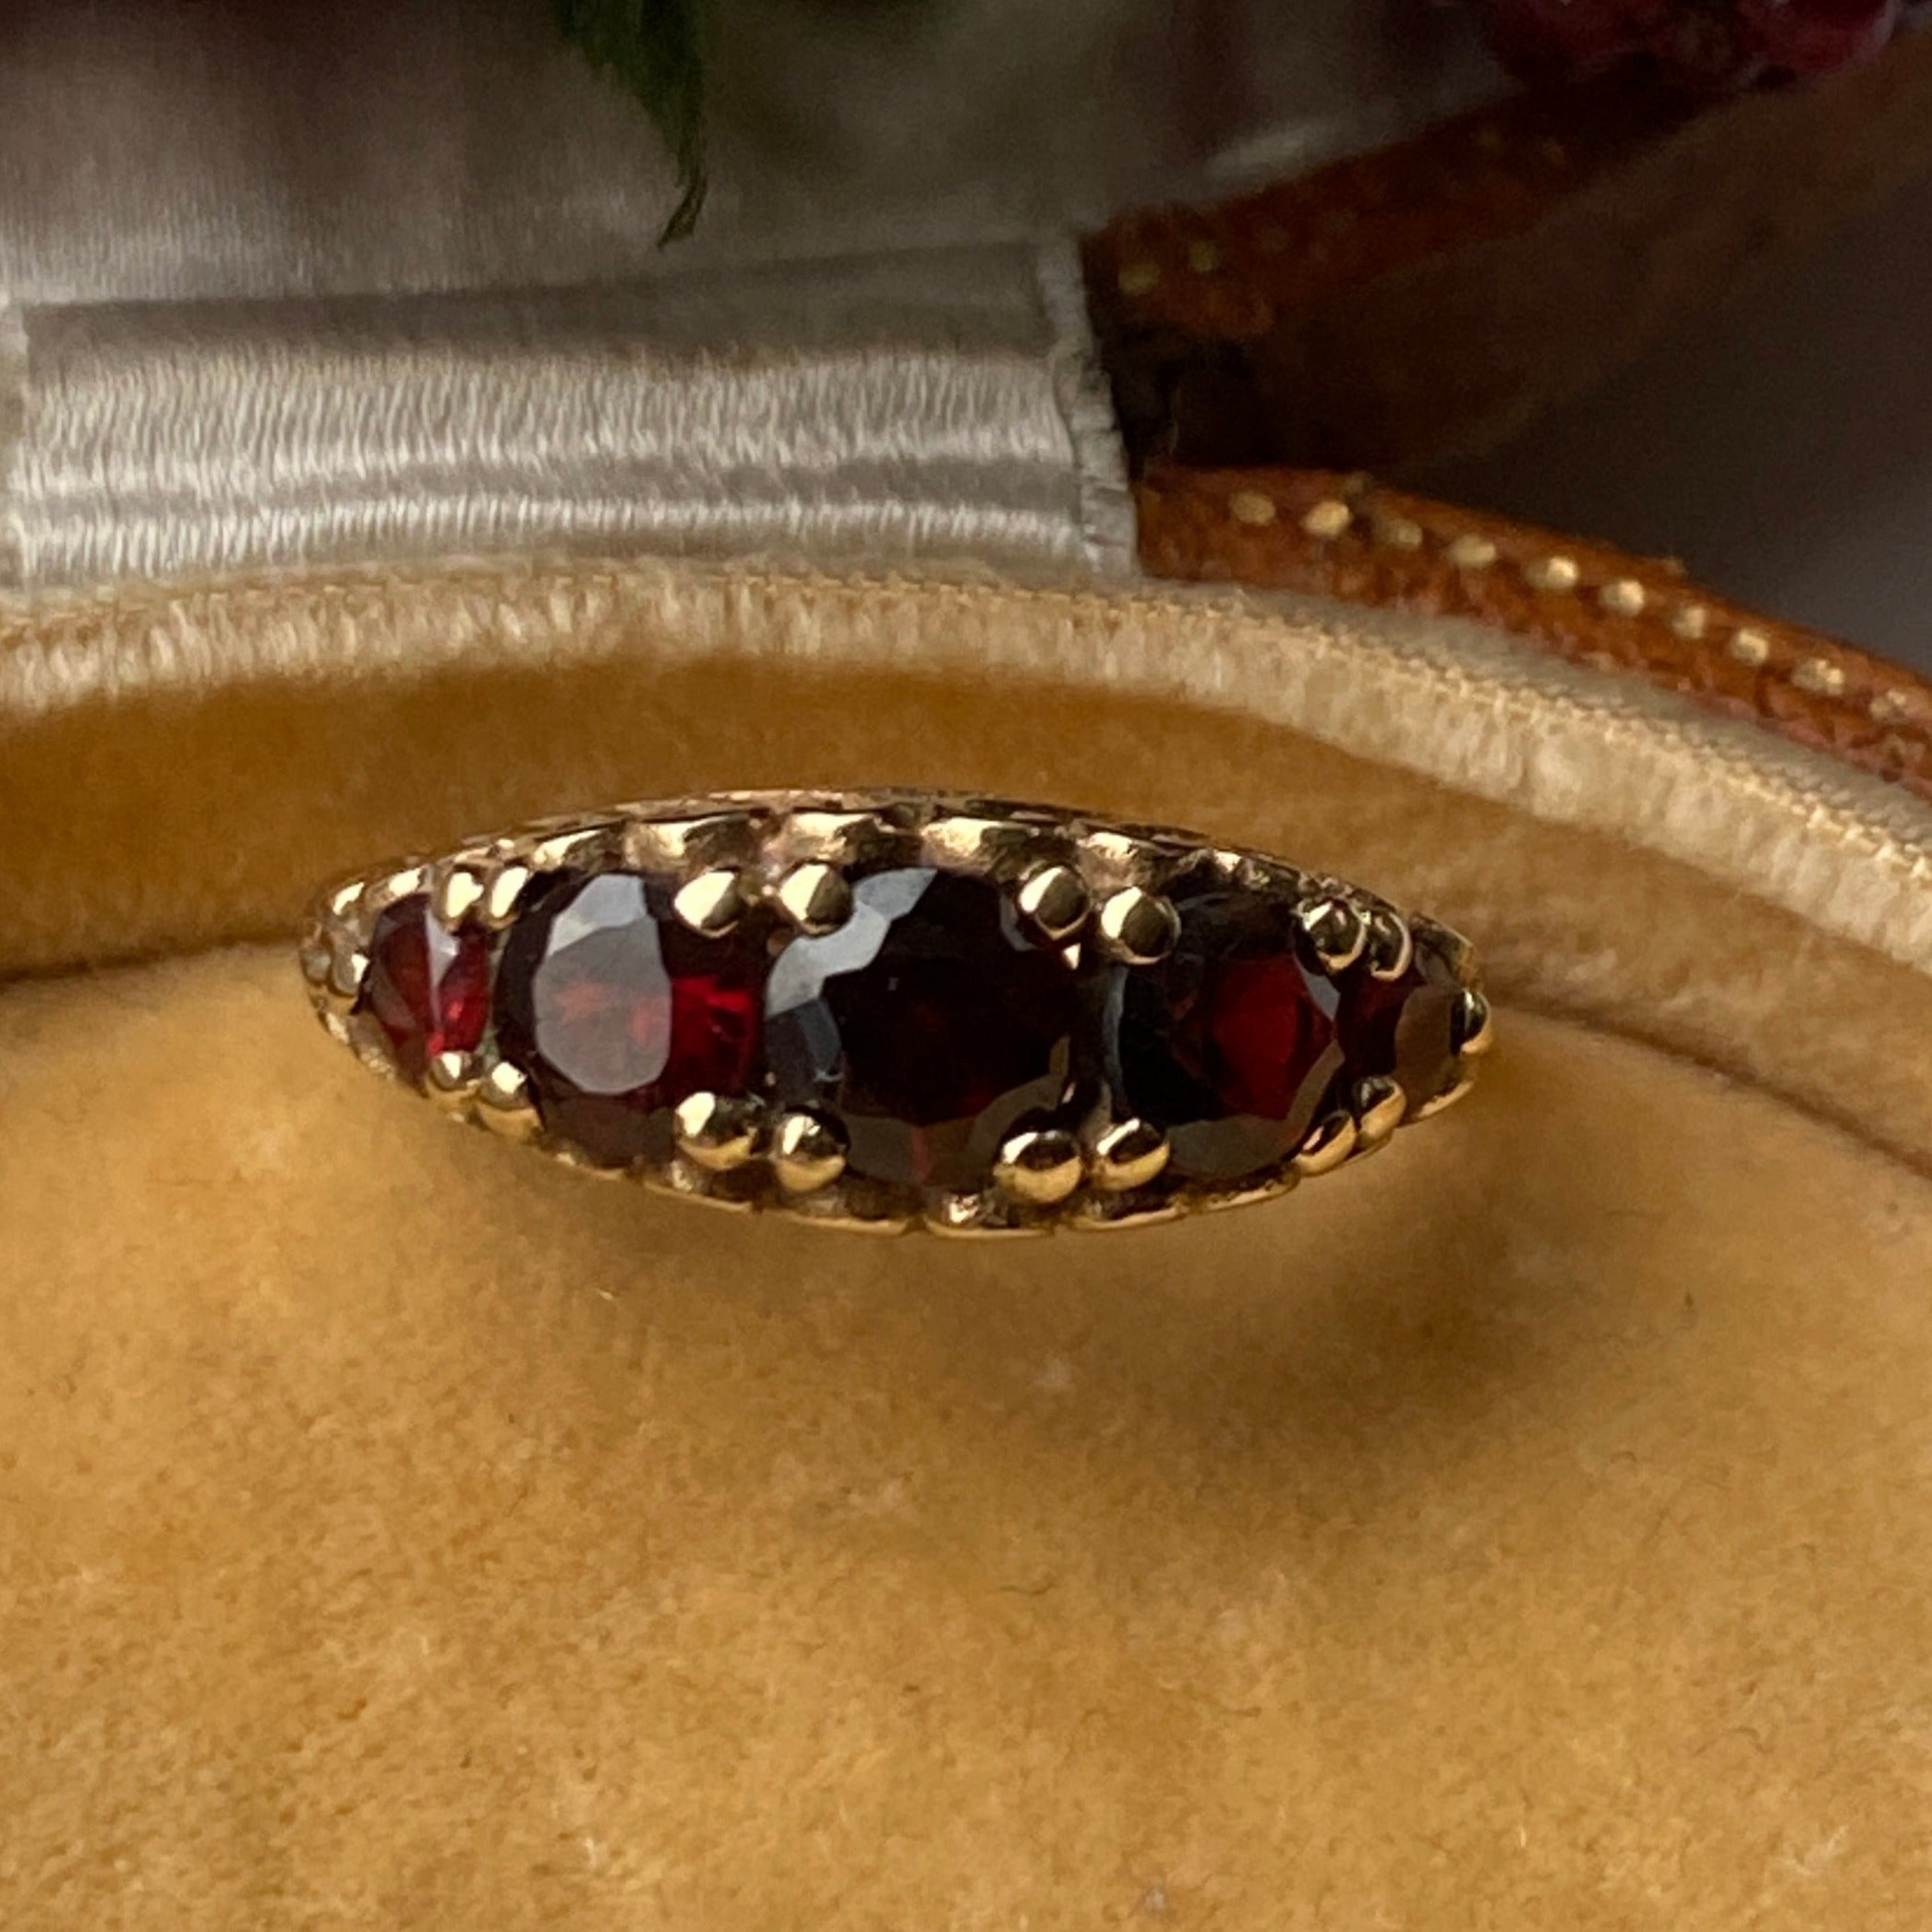 9ct Gold Garnet Ring Ladies Five Garnet Vintage Size O 1/2 or 7 1/2 US.